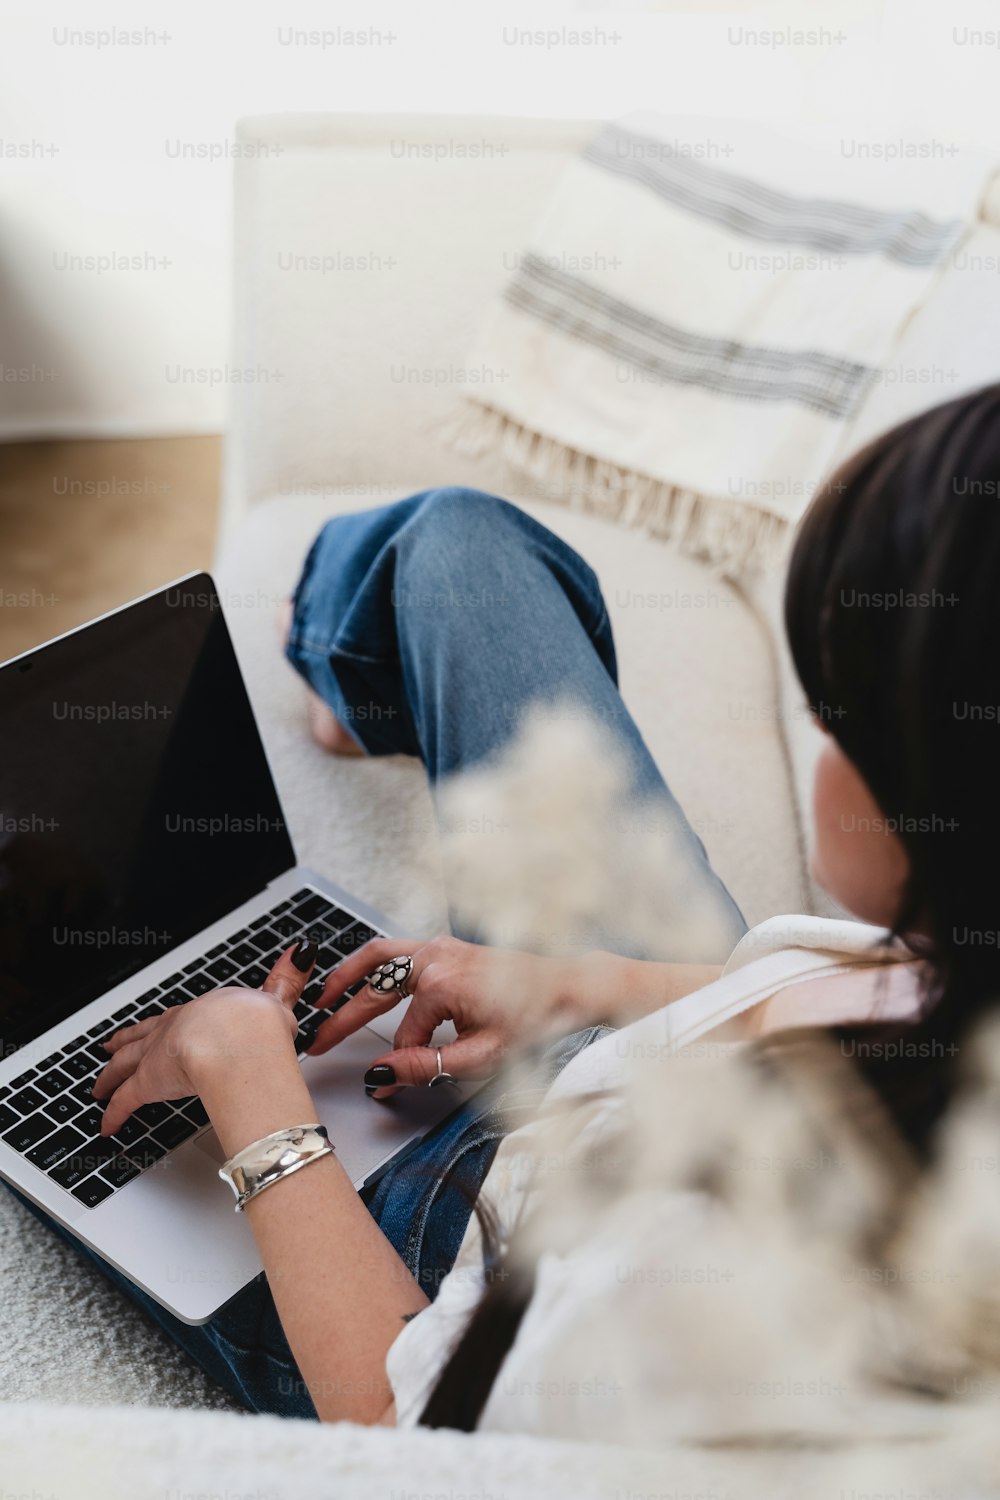 una donna seduta su un divano usando un computer portatile